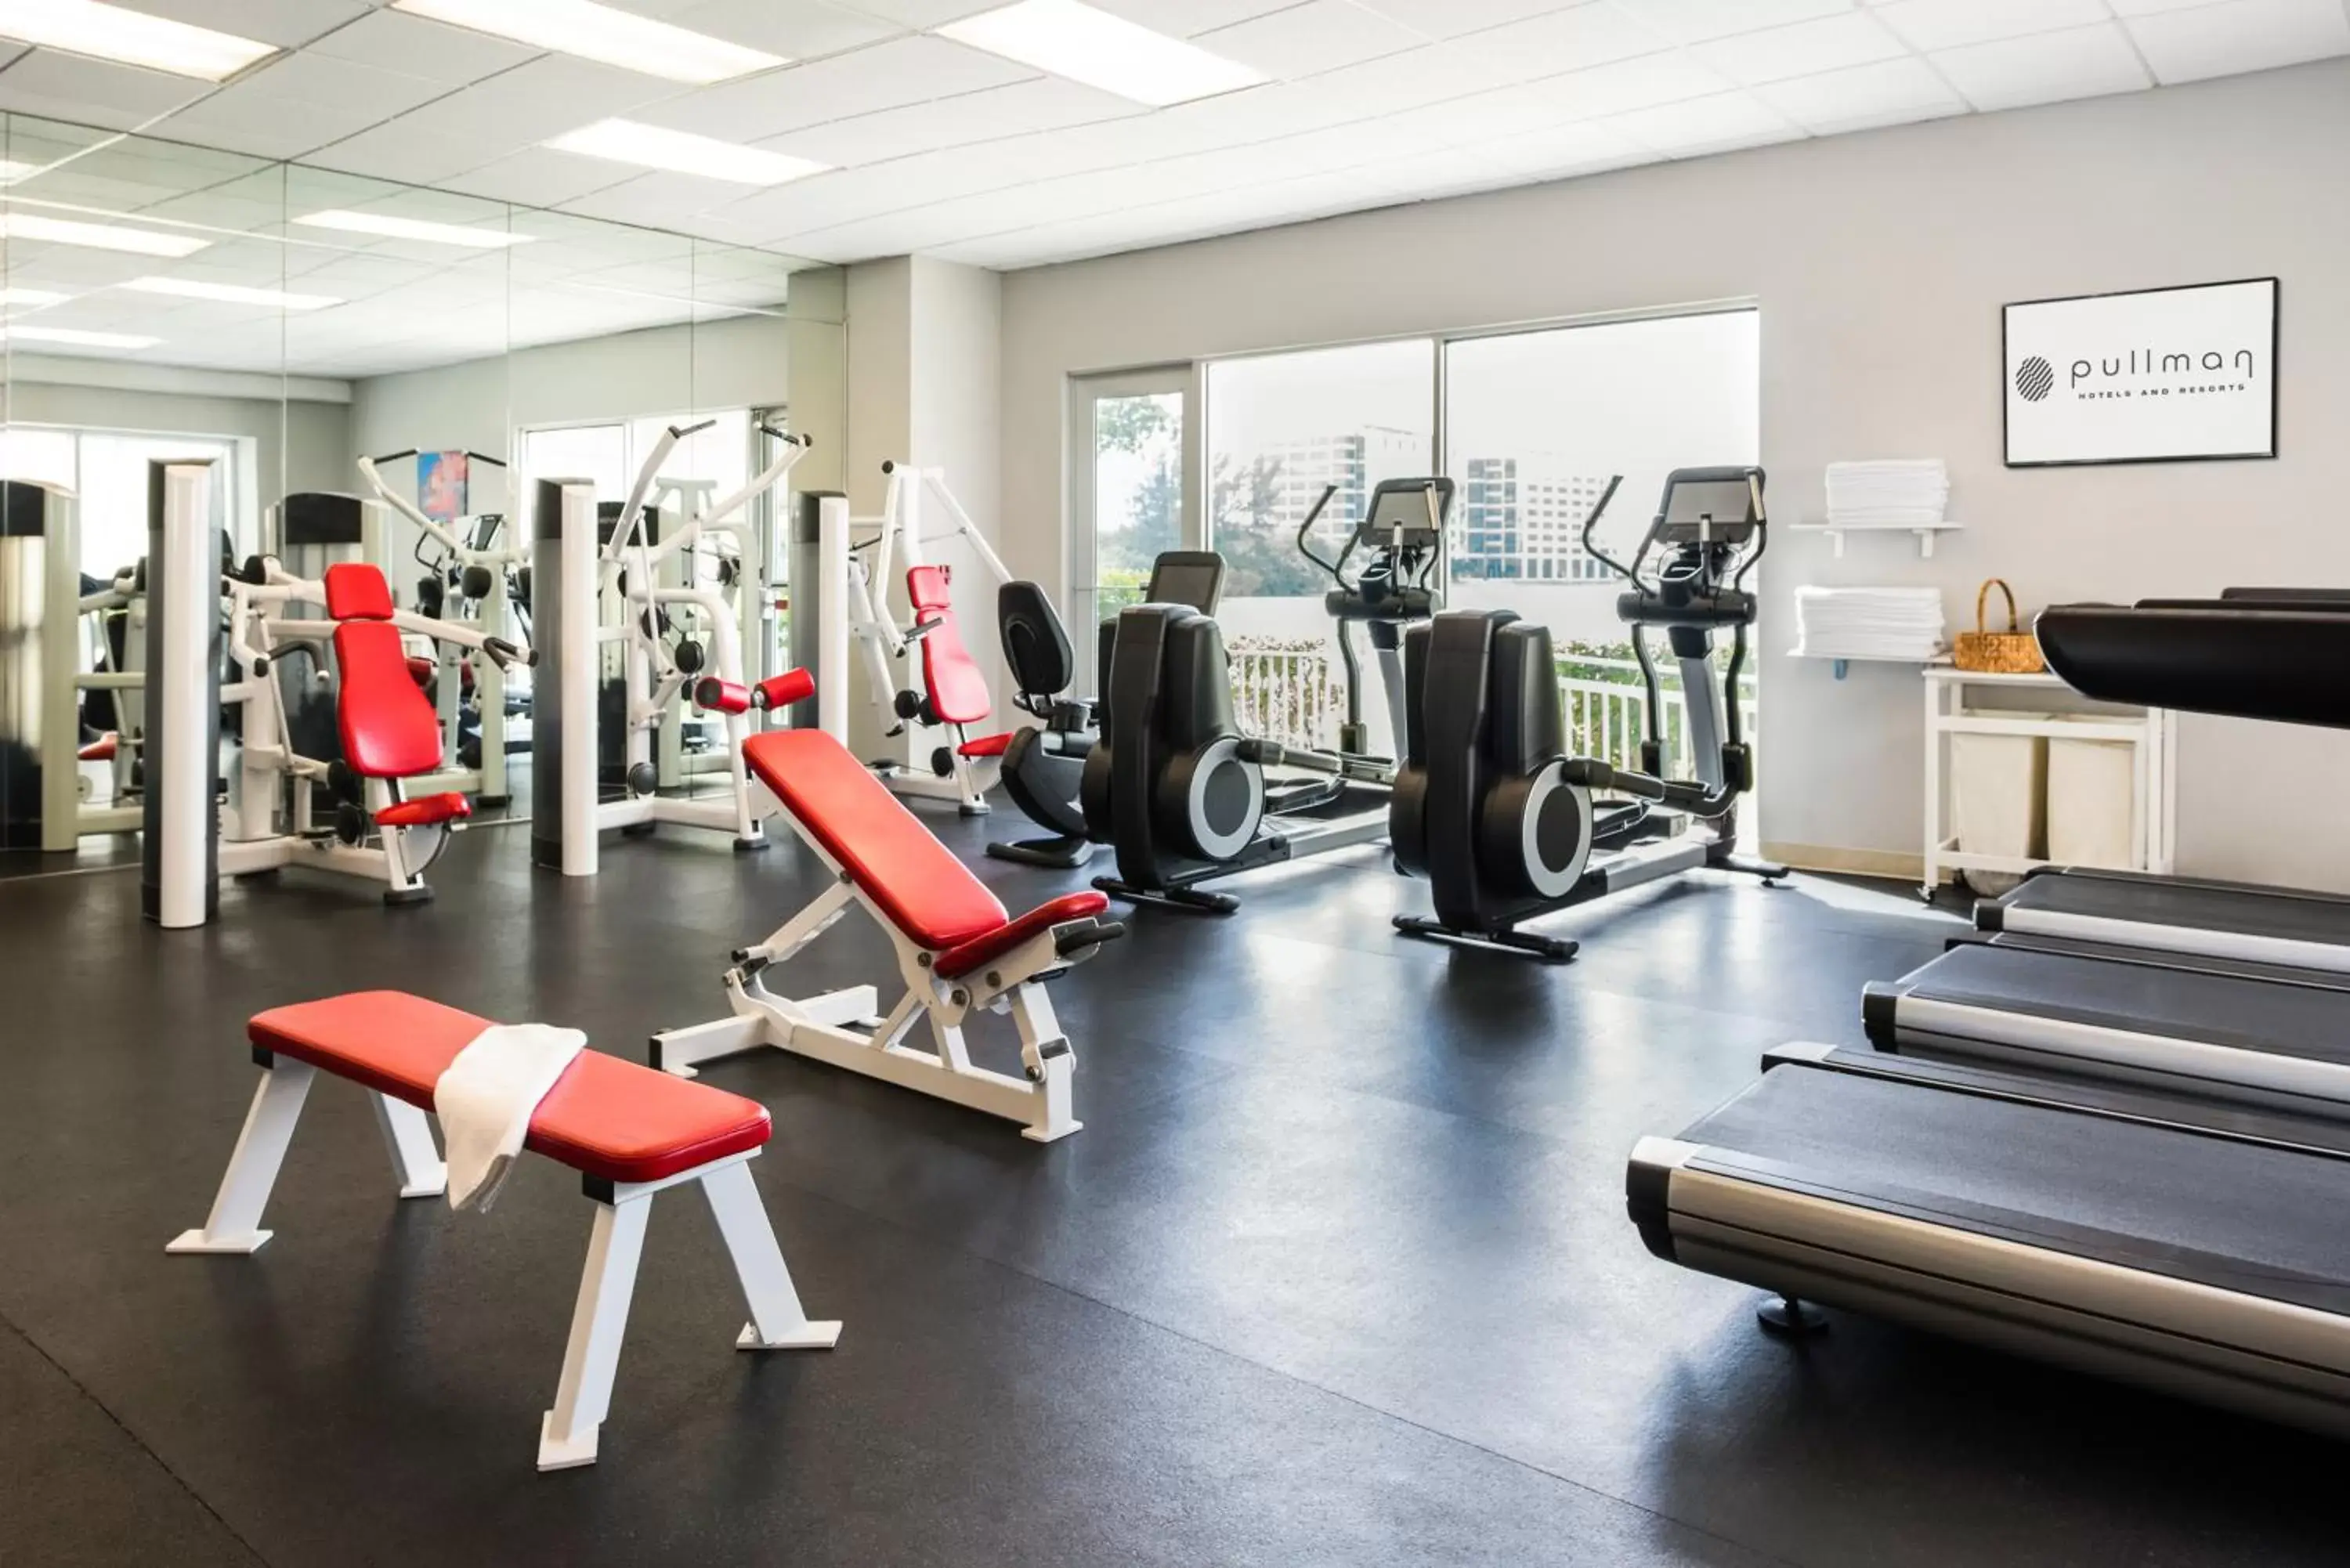 Fitness centre/facilities, Fitness Center/Facilities in Pullman Miami Airport